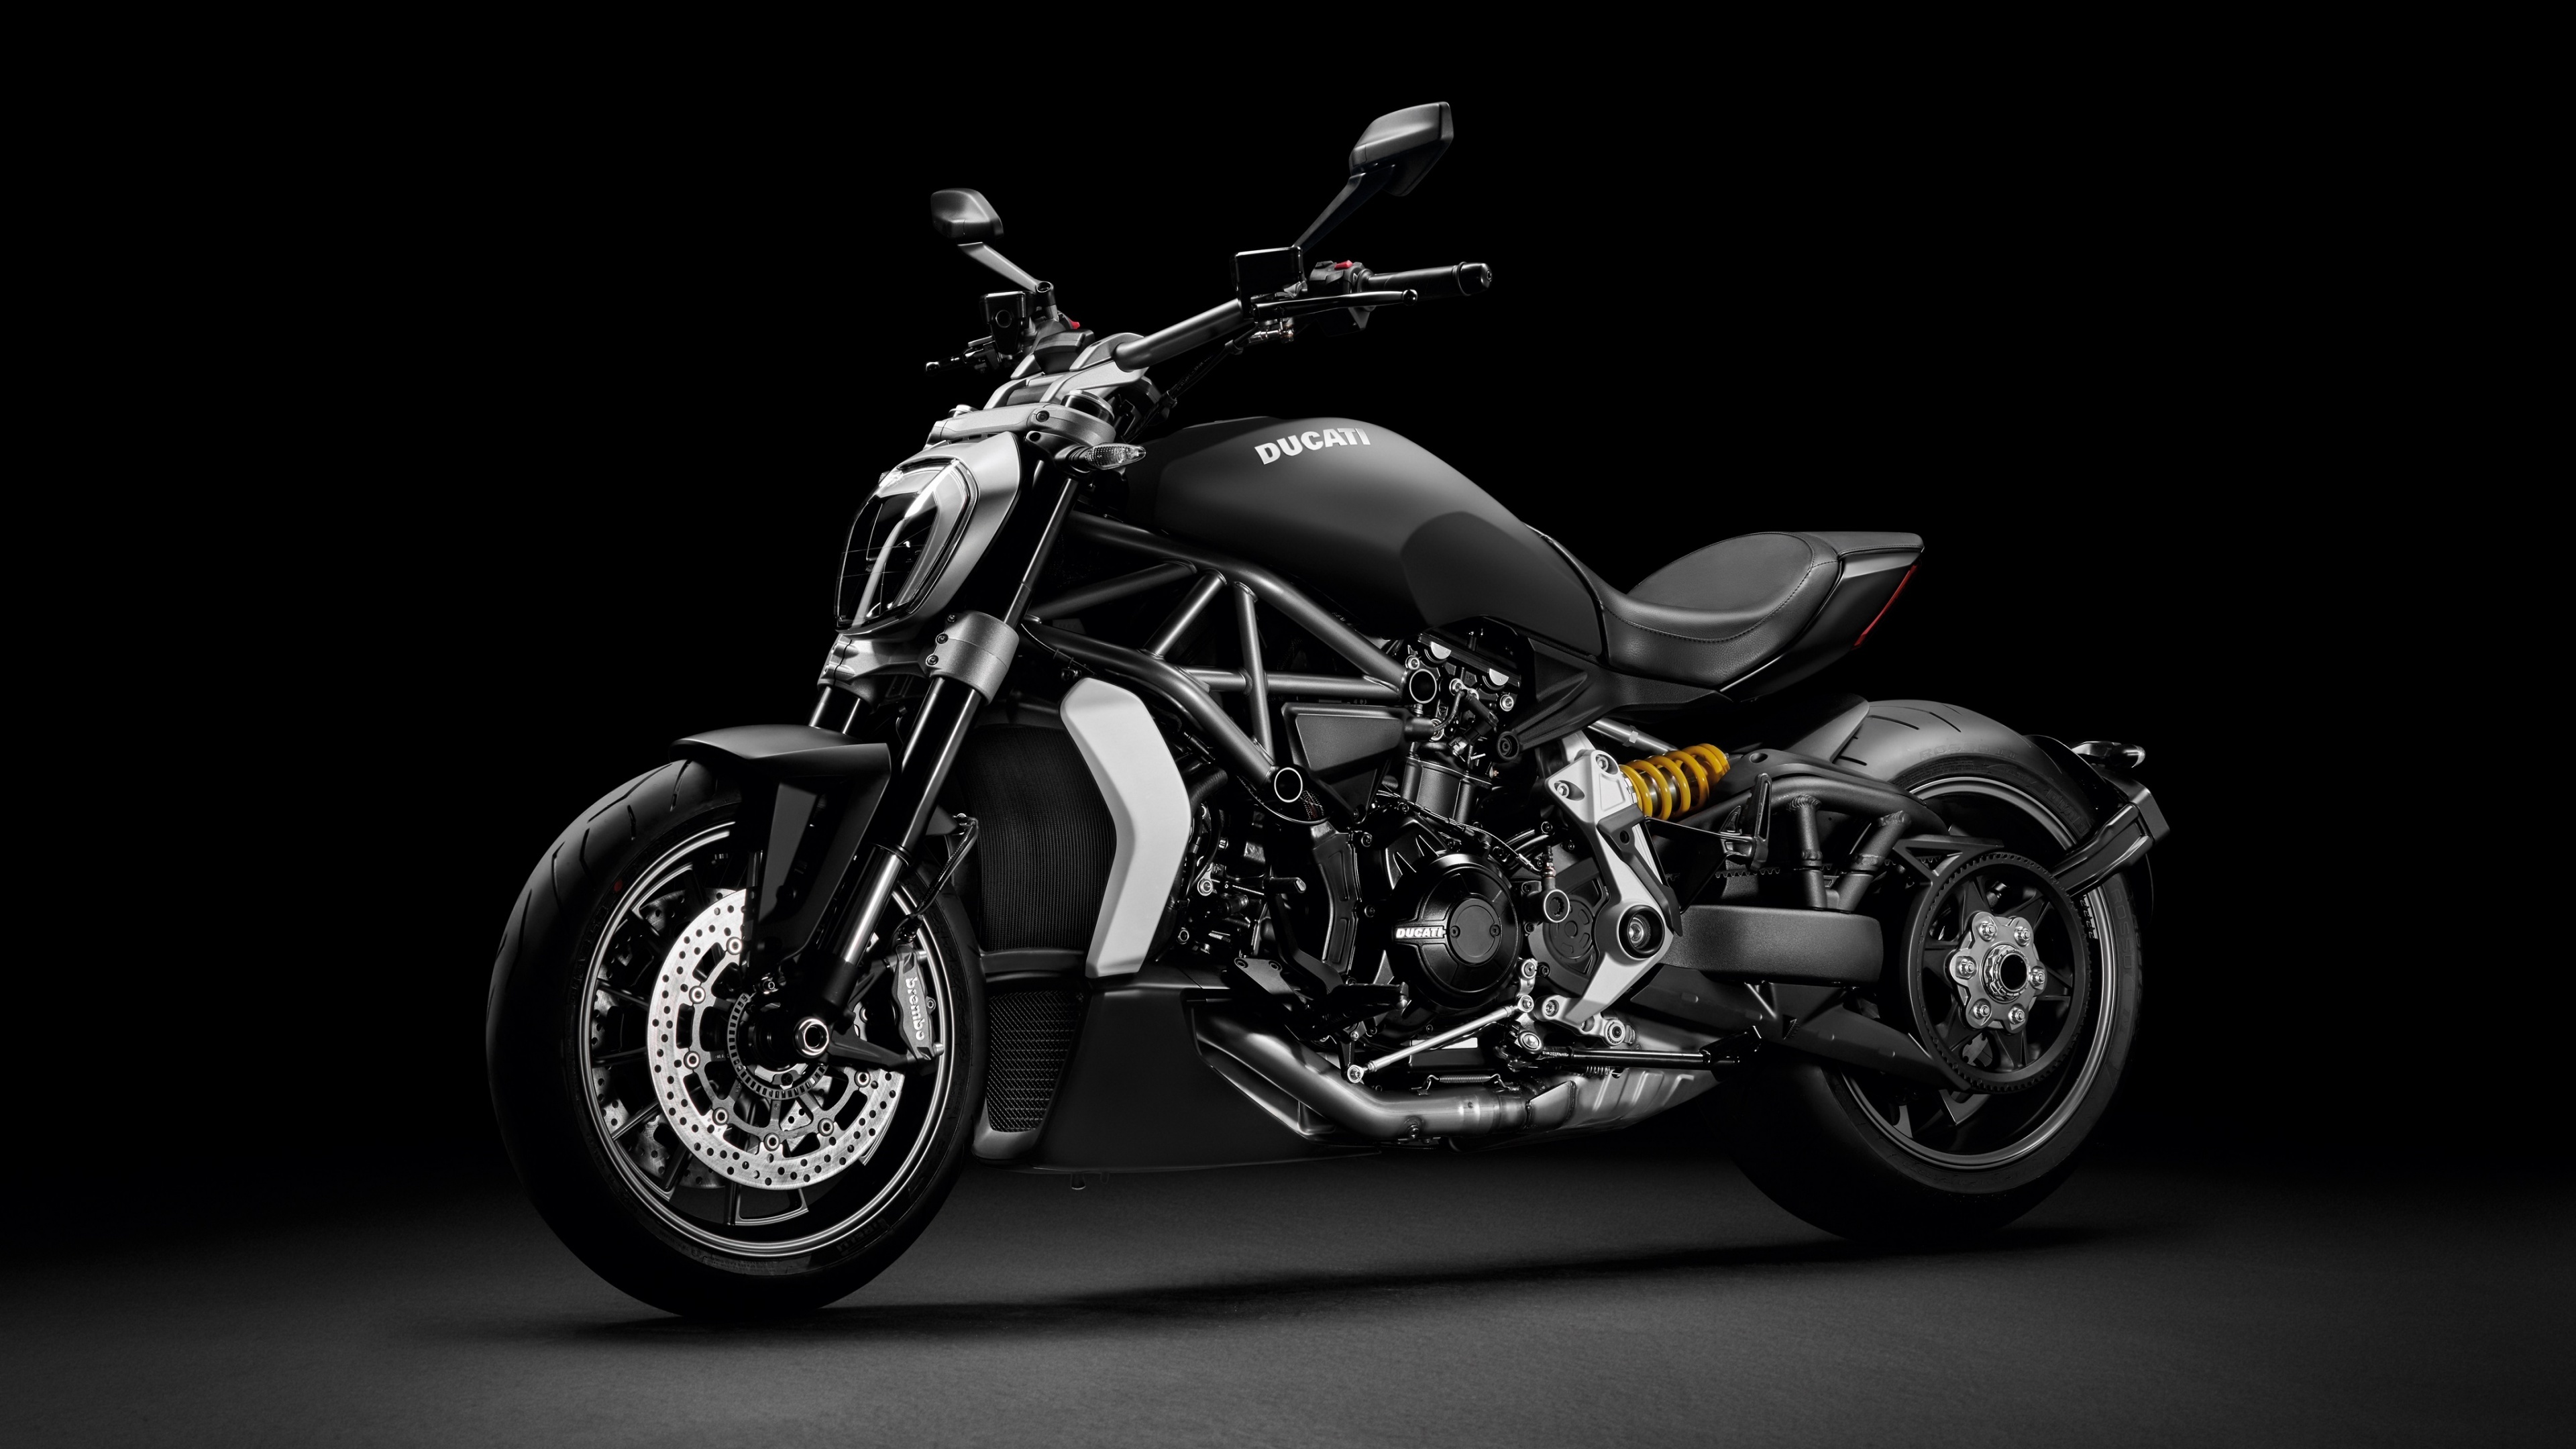 Ducati XDiavel, 4K wallpaper, Dark background, Stylish cruiser motorcycle, 3840x2160 4K Desktop